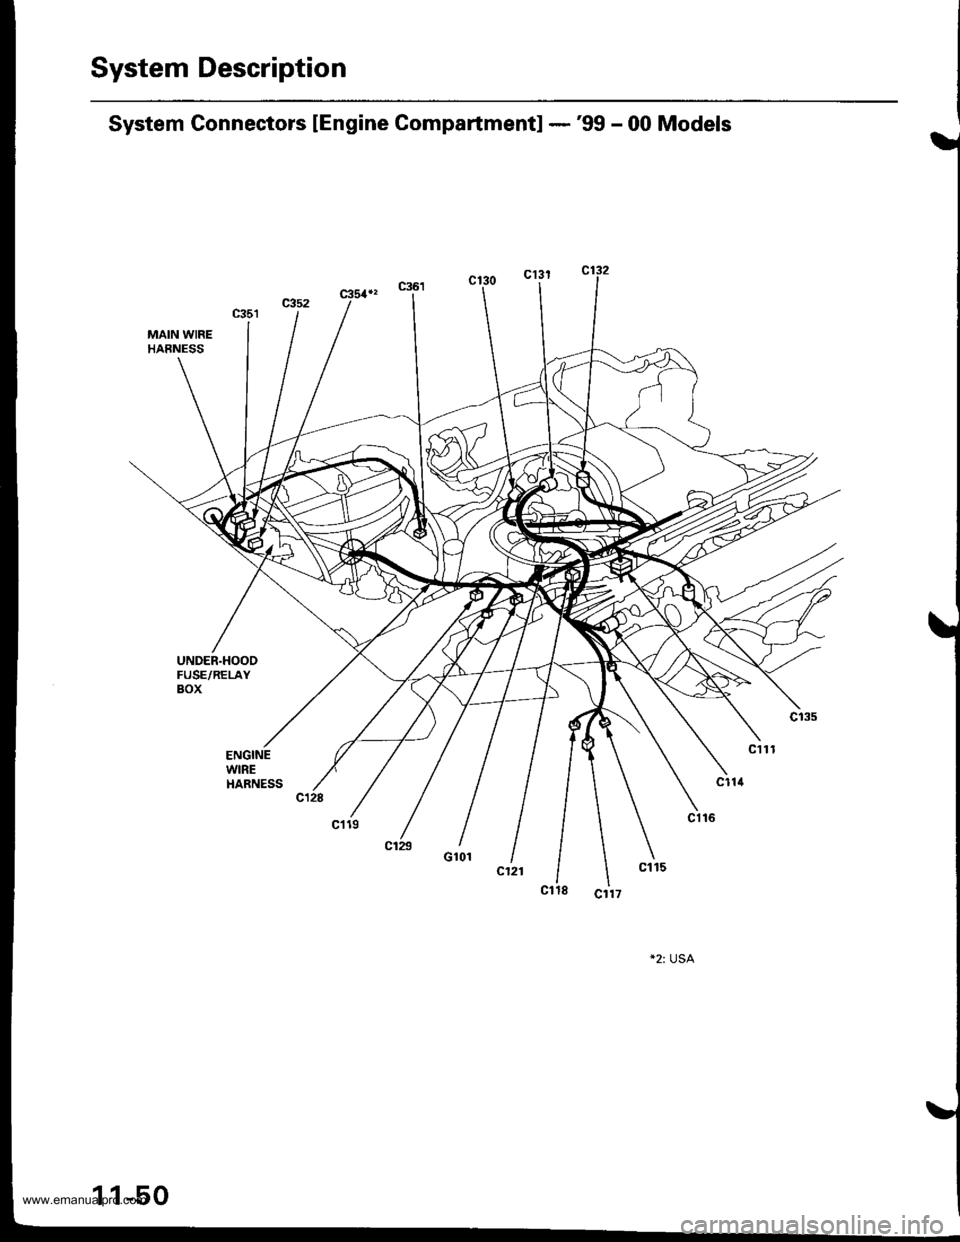 HONDA CR-V 1998 RD1-RD3 / 1.G Workshop Manual 
System Description
System Gonnectors lEngine Compartment] -99 - 00 Models
MAIN WIREHAENESS
UNDER.HOOOFUSE/RELAYBOX
ENGINEWIREHARNESS
www.emanualpro.com  